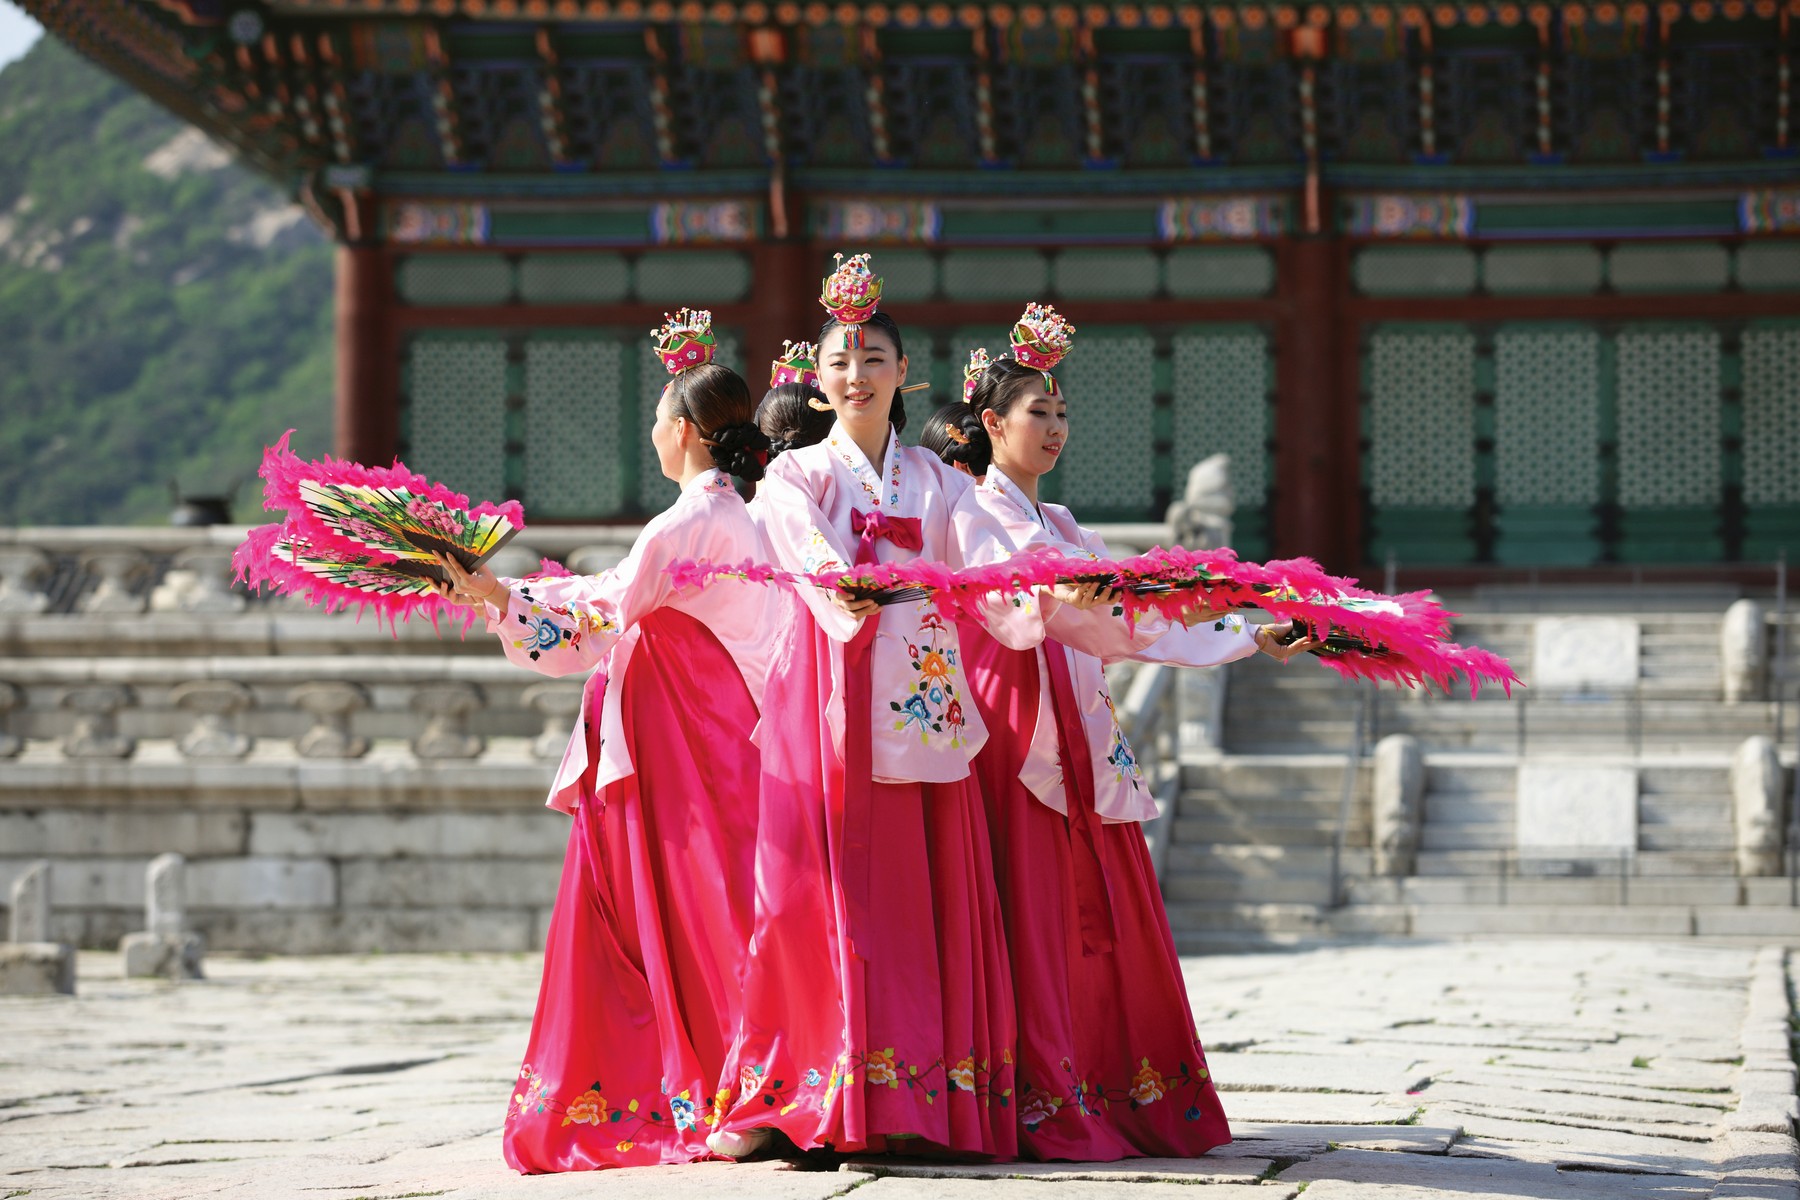 Buchaechum adalah tarian rakyat tradisional yang ditampilkan dengan indah oleh para penari wanita yang membawa kipas dan memakai pakaian tradisional Hanbok.